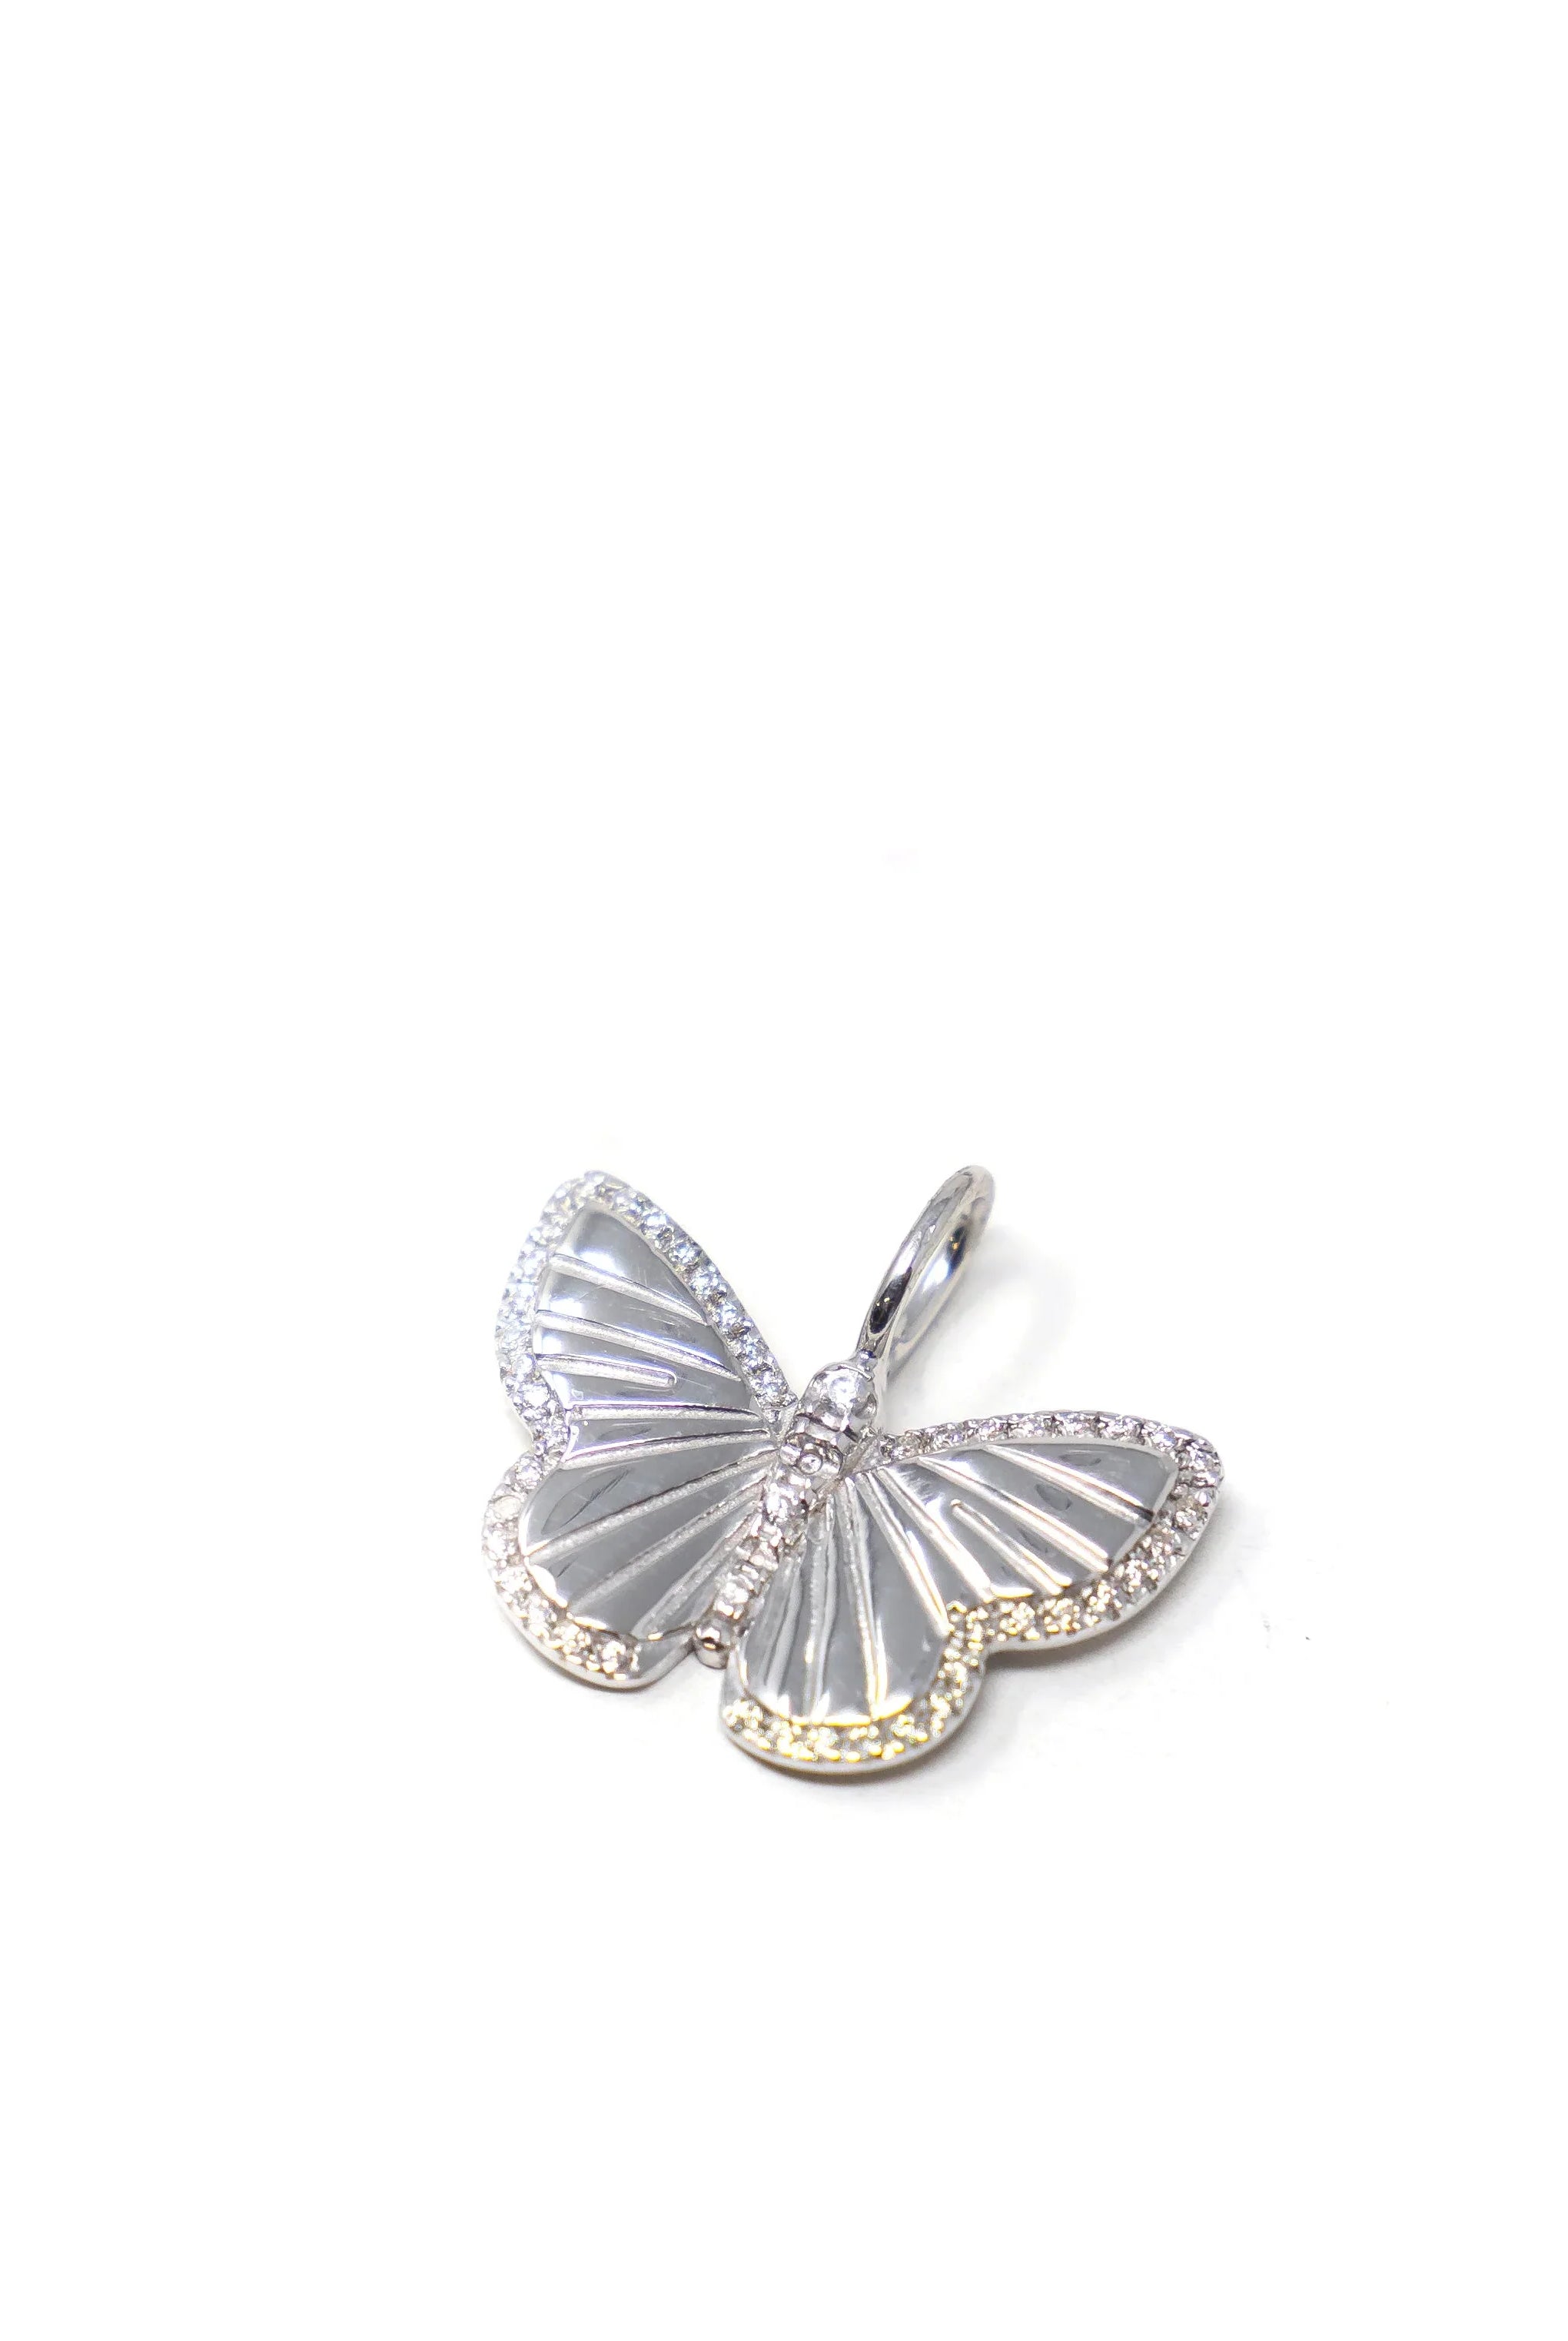 Butterfly Charm-Charms & Pendants-The Sis Kiss®-Urban Threadz Boutique, Women's Fashion Boutique in Saugatuck, MI